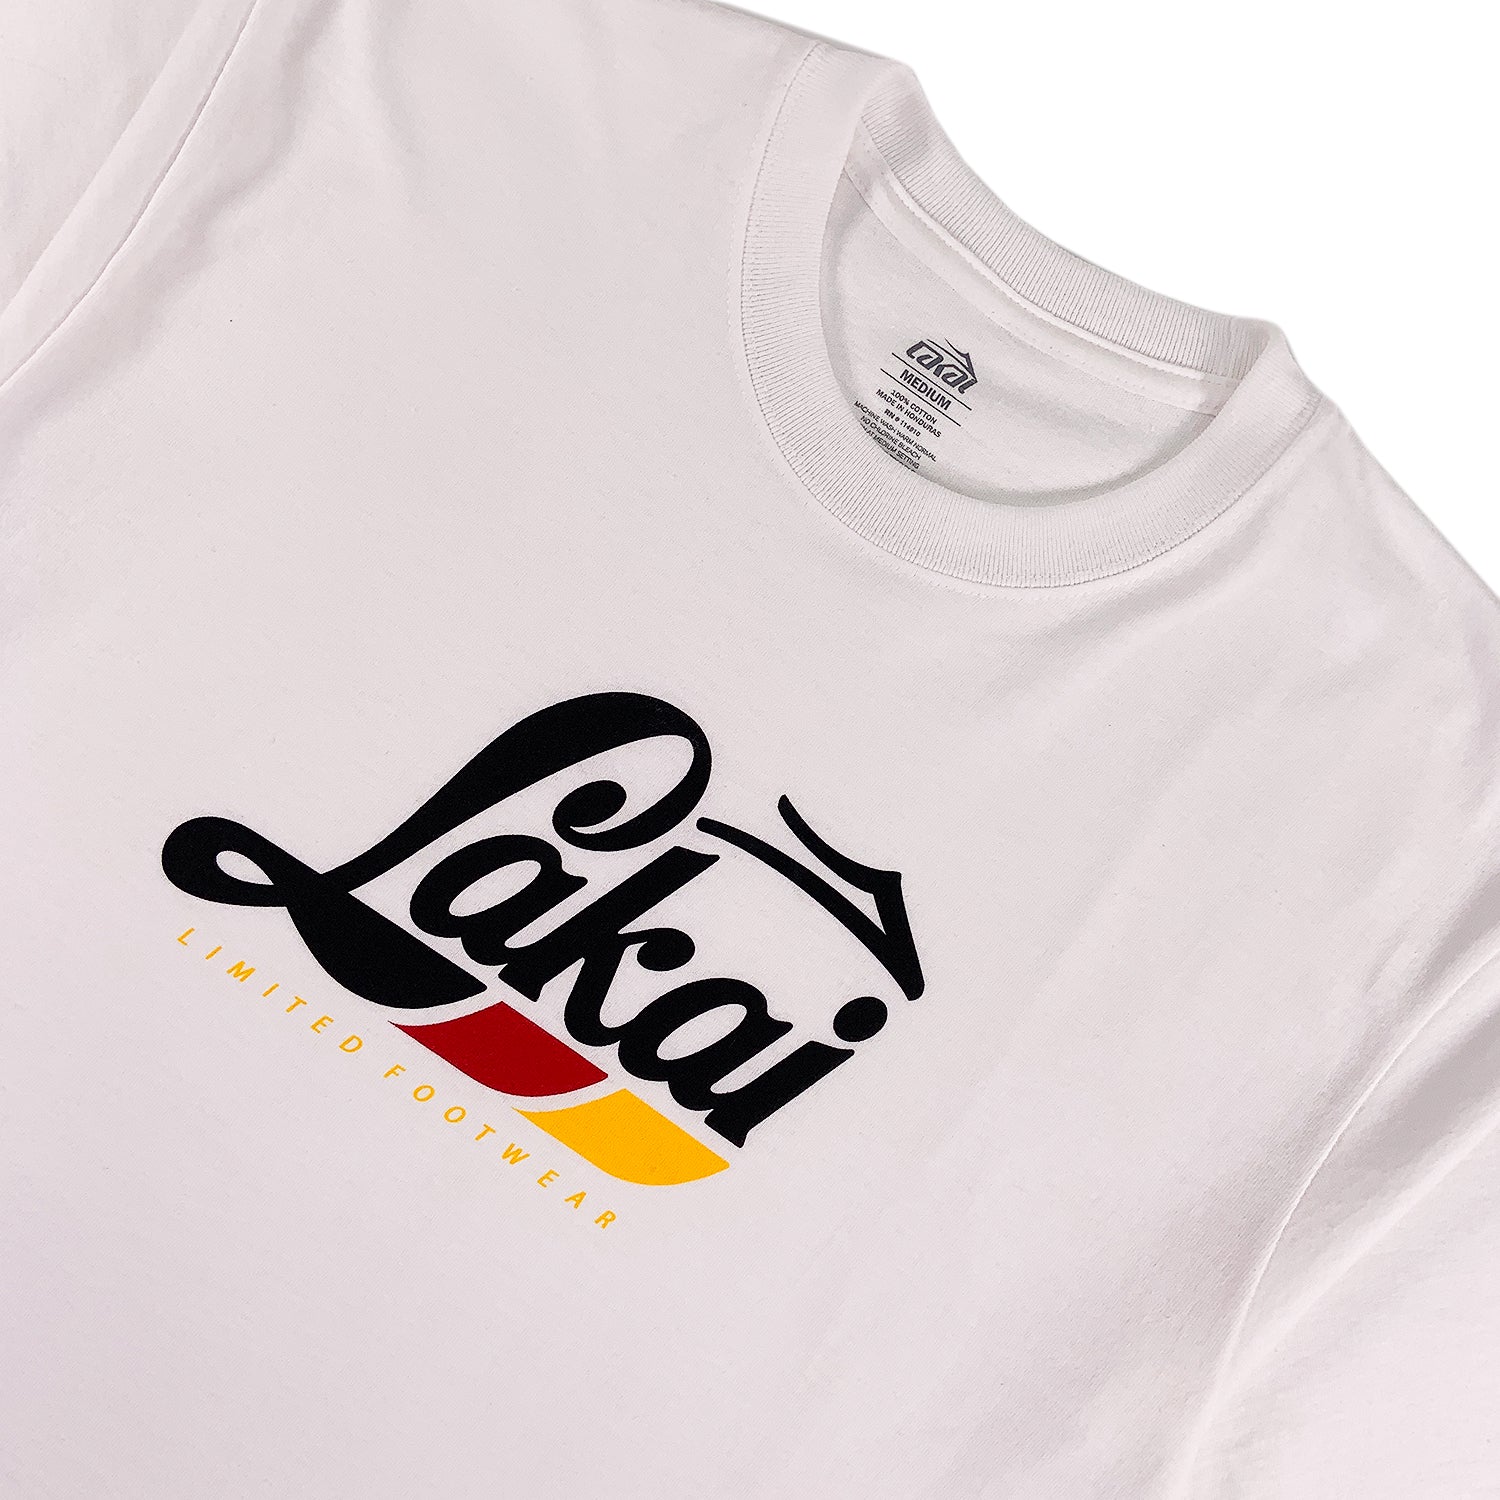 Lakai Motorworks T-Shirt White - Prime Delux Store